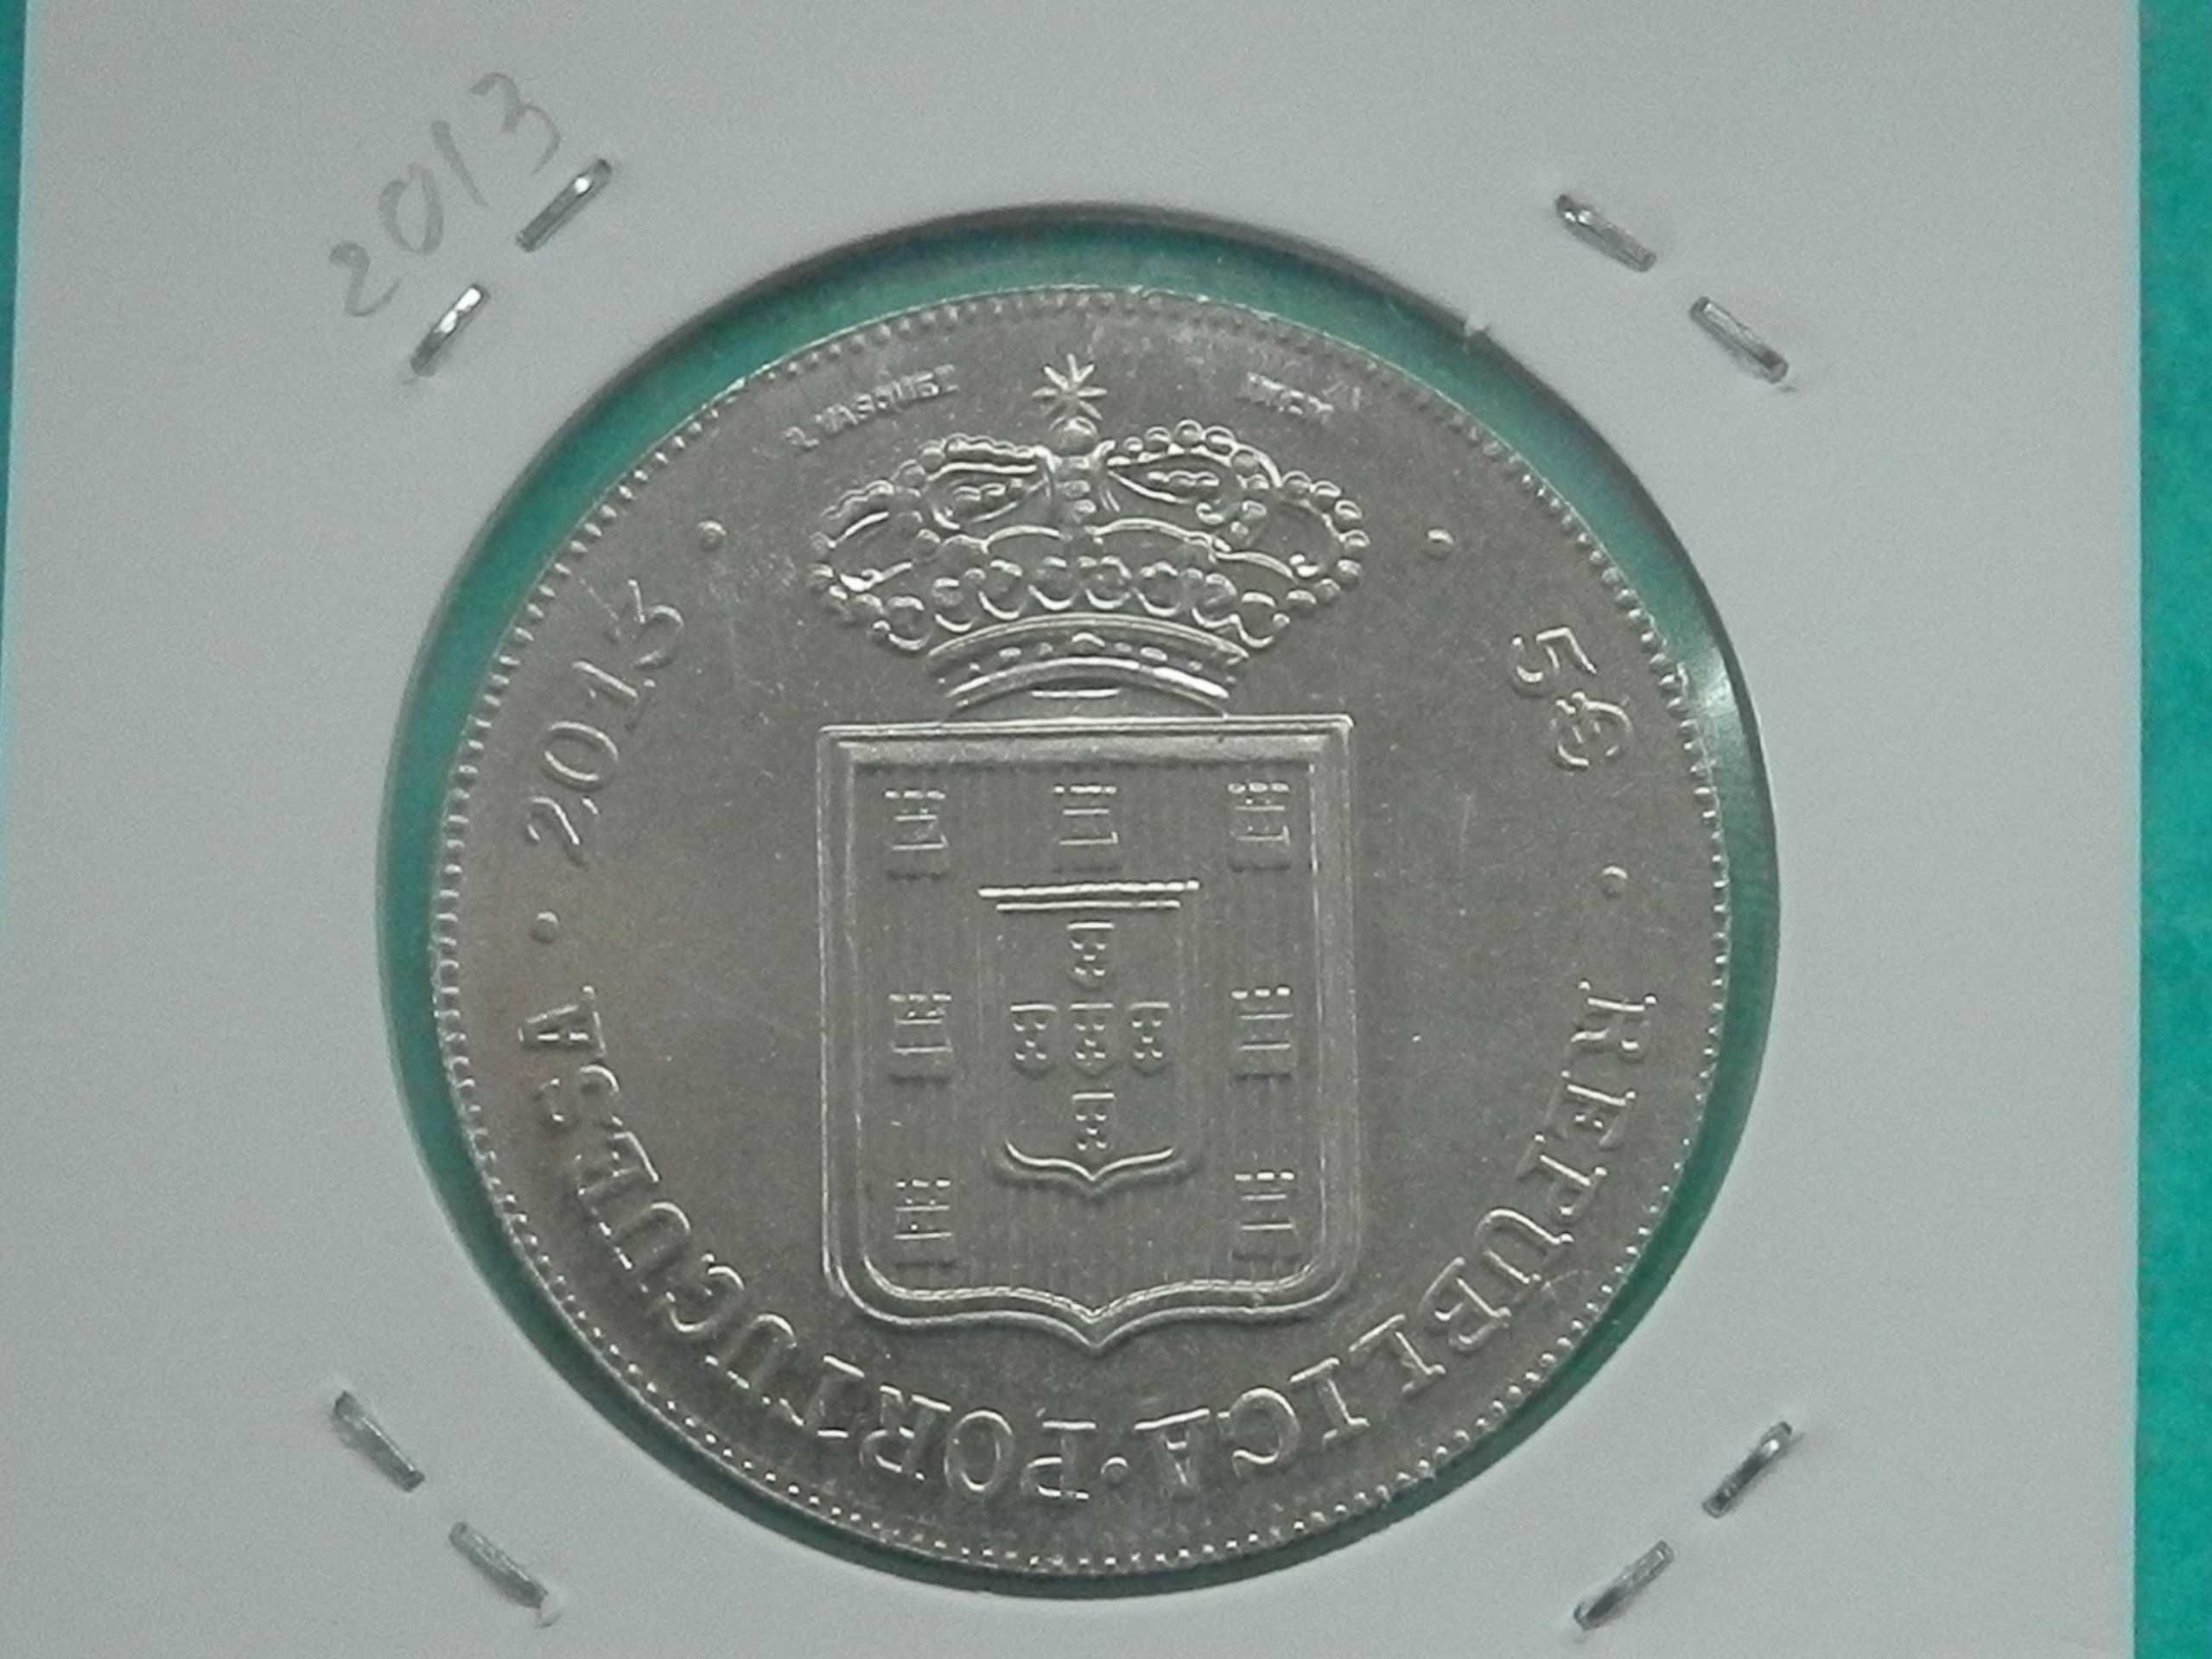 1073 - Euro: 5,00 euros 2013 cuni, Maria II, por 5,50